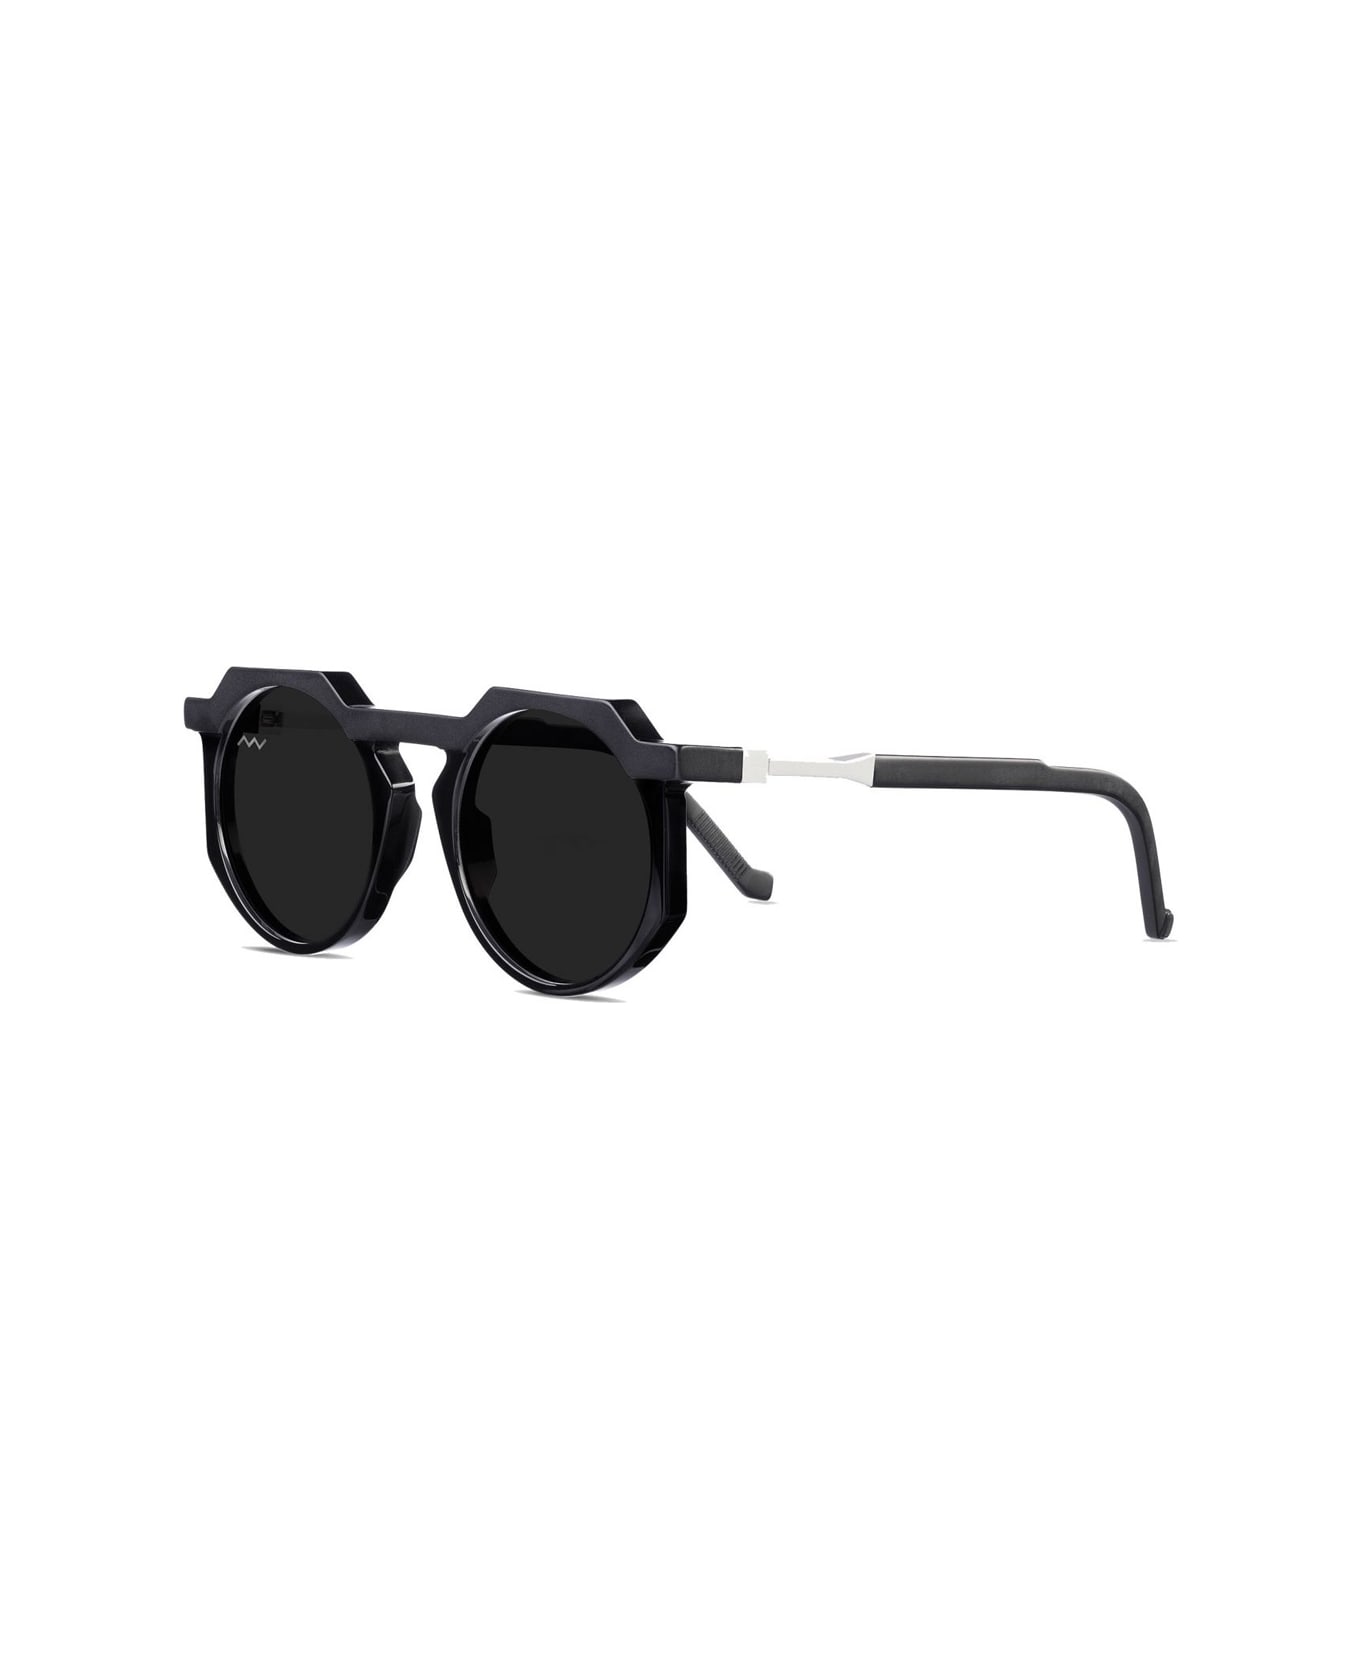 VAVA Wl0028 Black Sunglasses - Nero